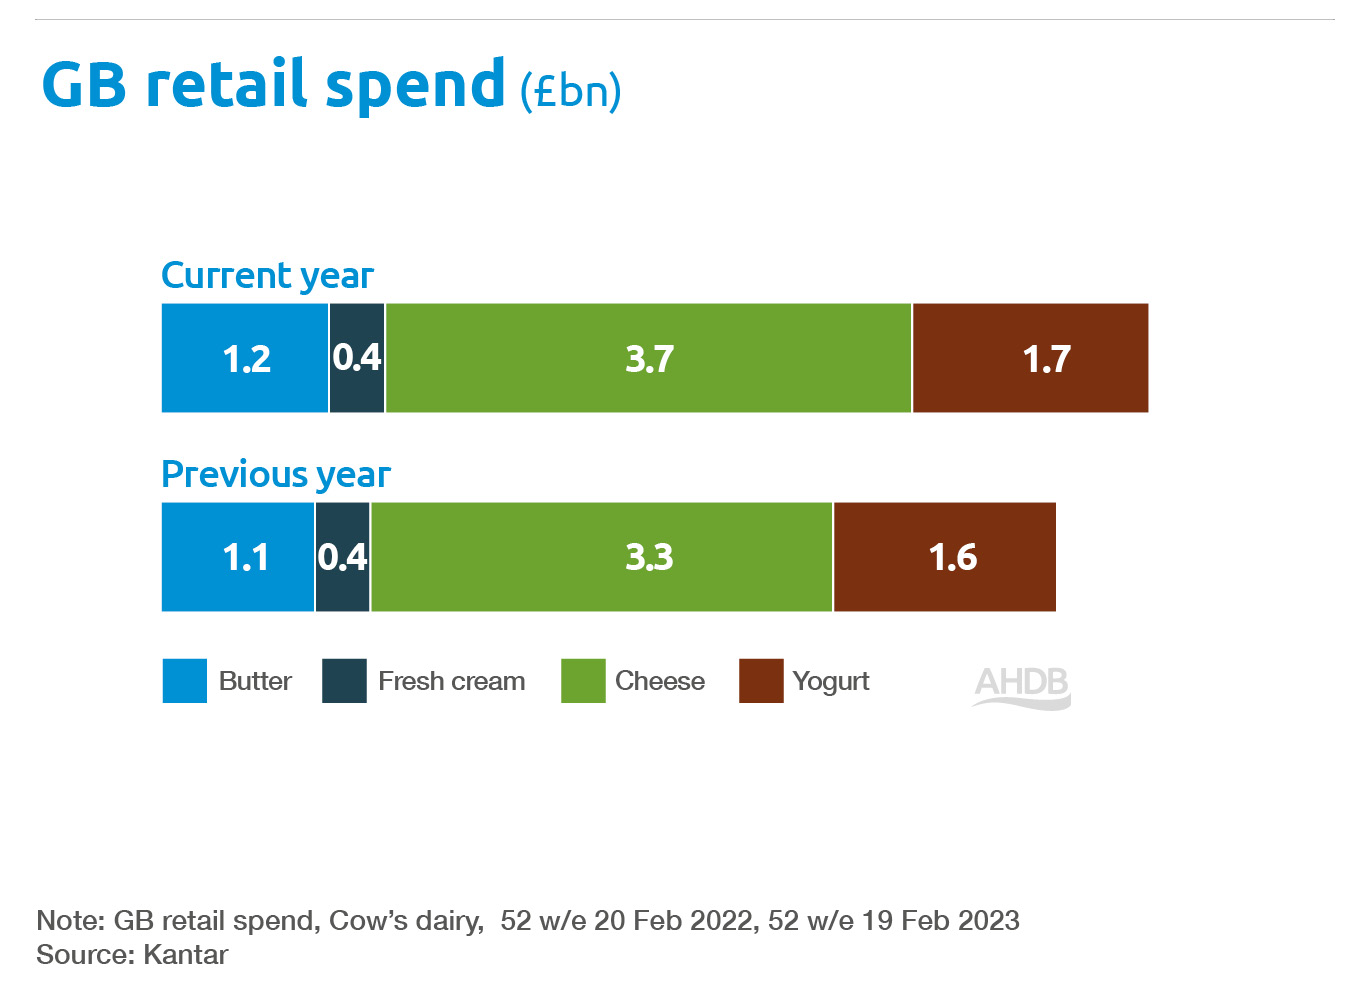 GB retail spend - 2022/2023 comparison of butter, fresh cream, cheese and yogurt.